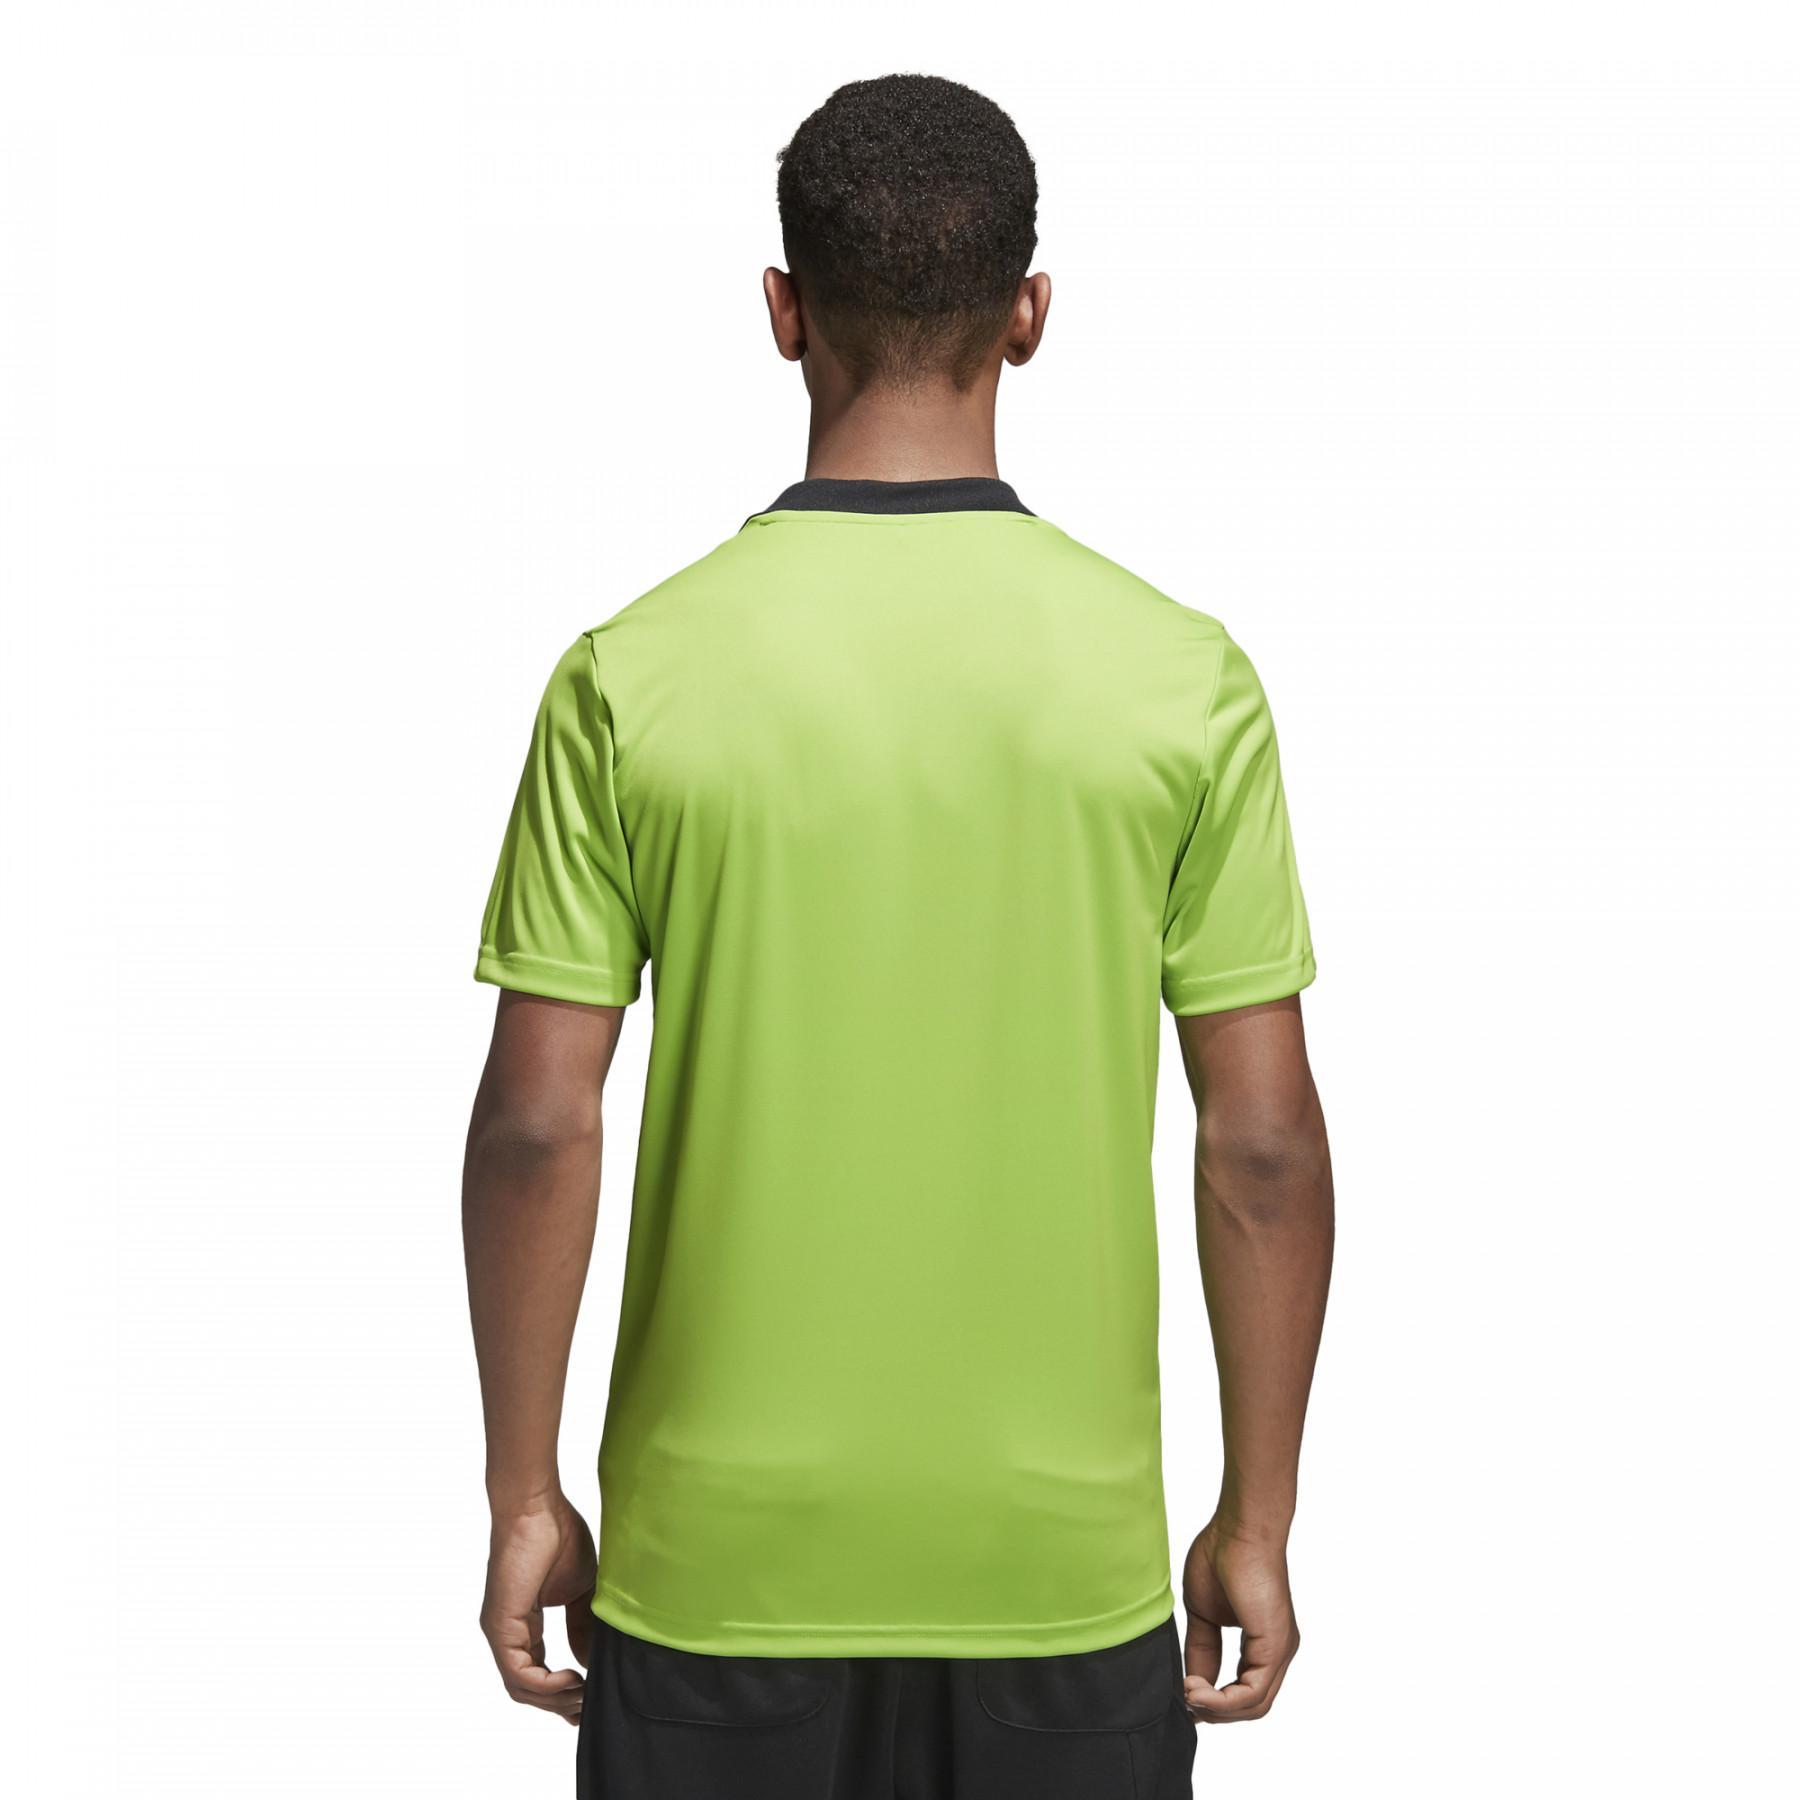 Koszulka sędziowska adidas Referee 18